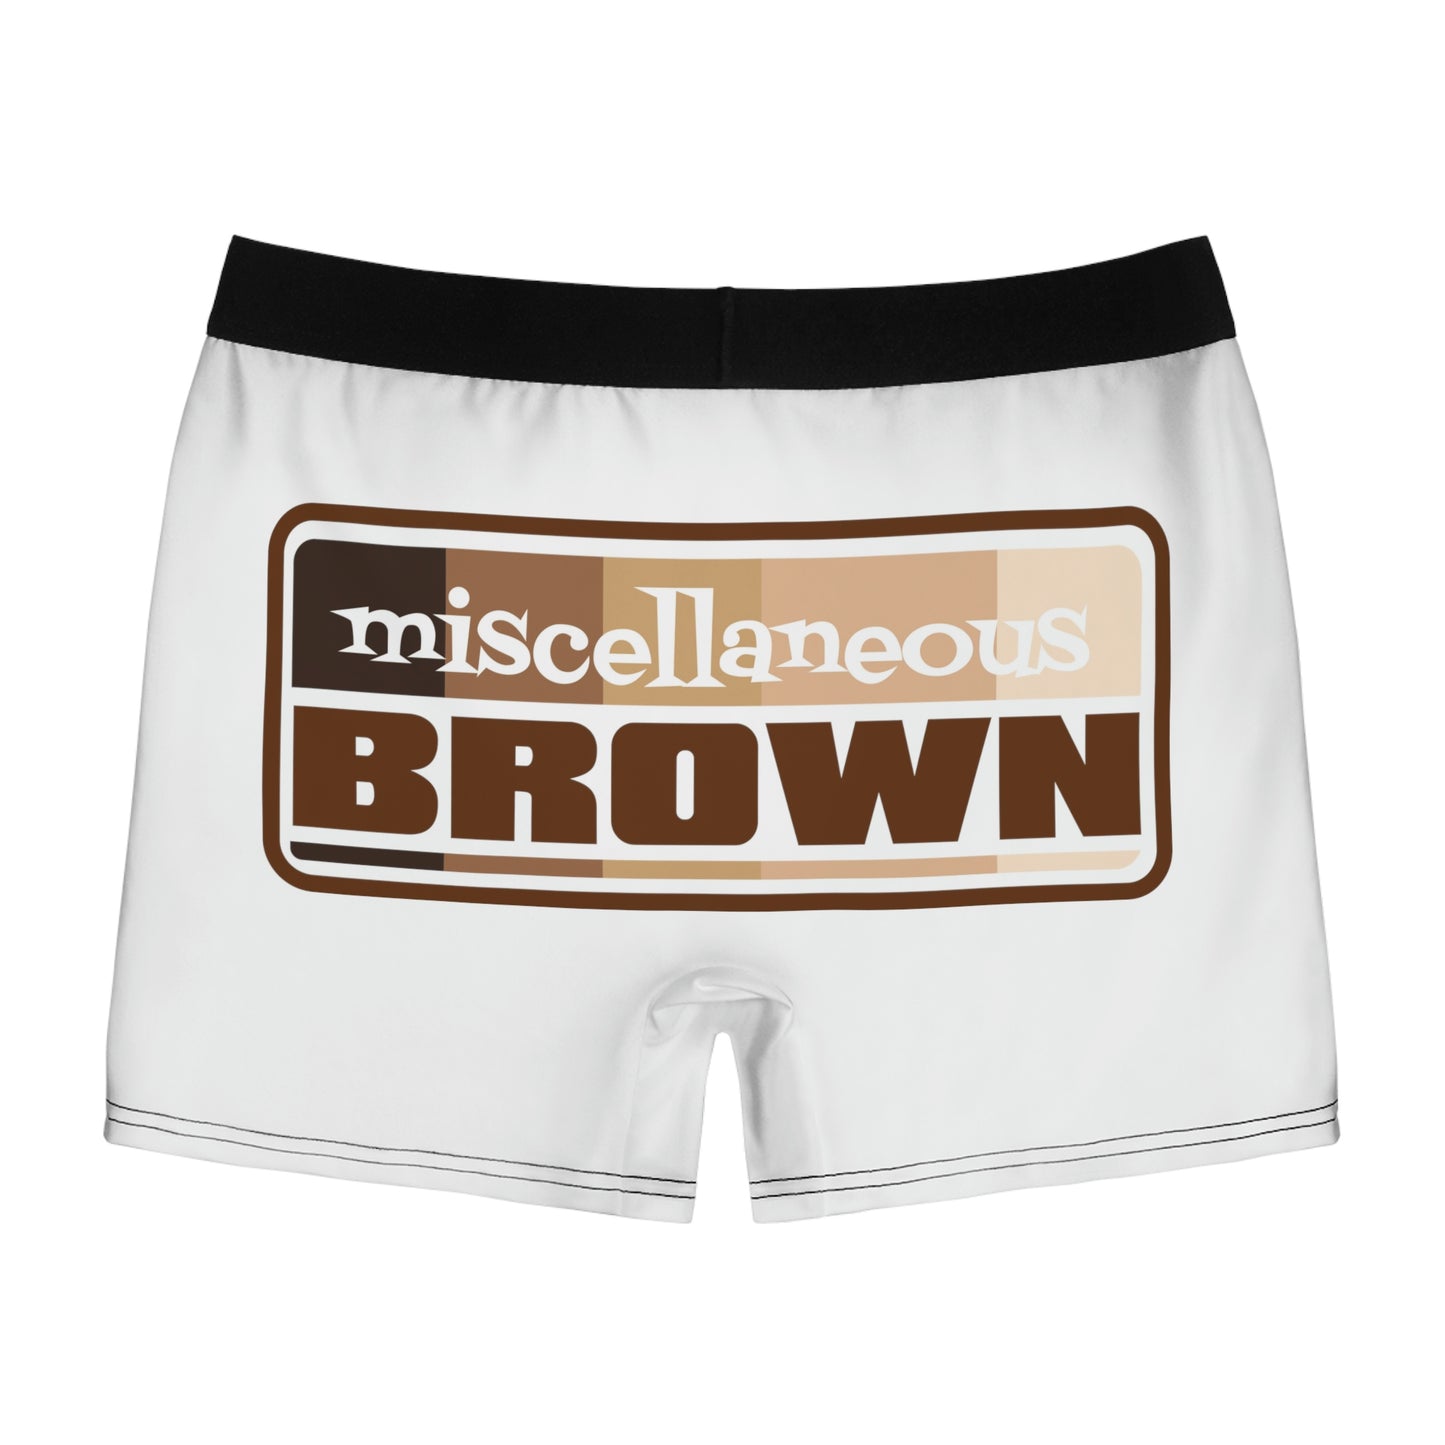 Official Miscellaneous Brown Comedy Special Men's Boxer Briefs